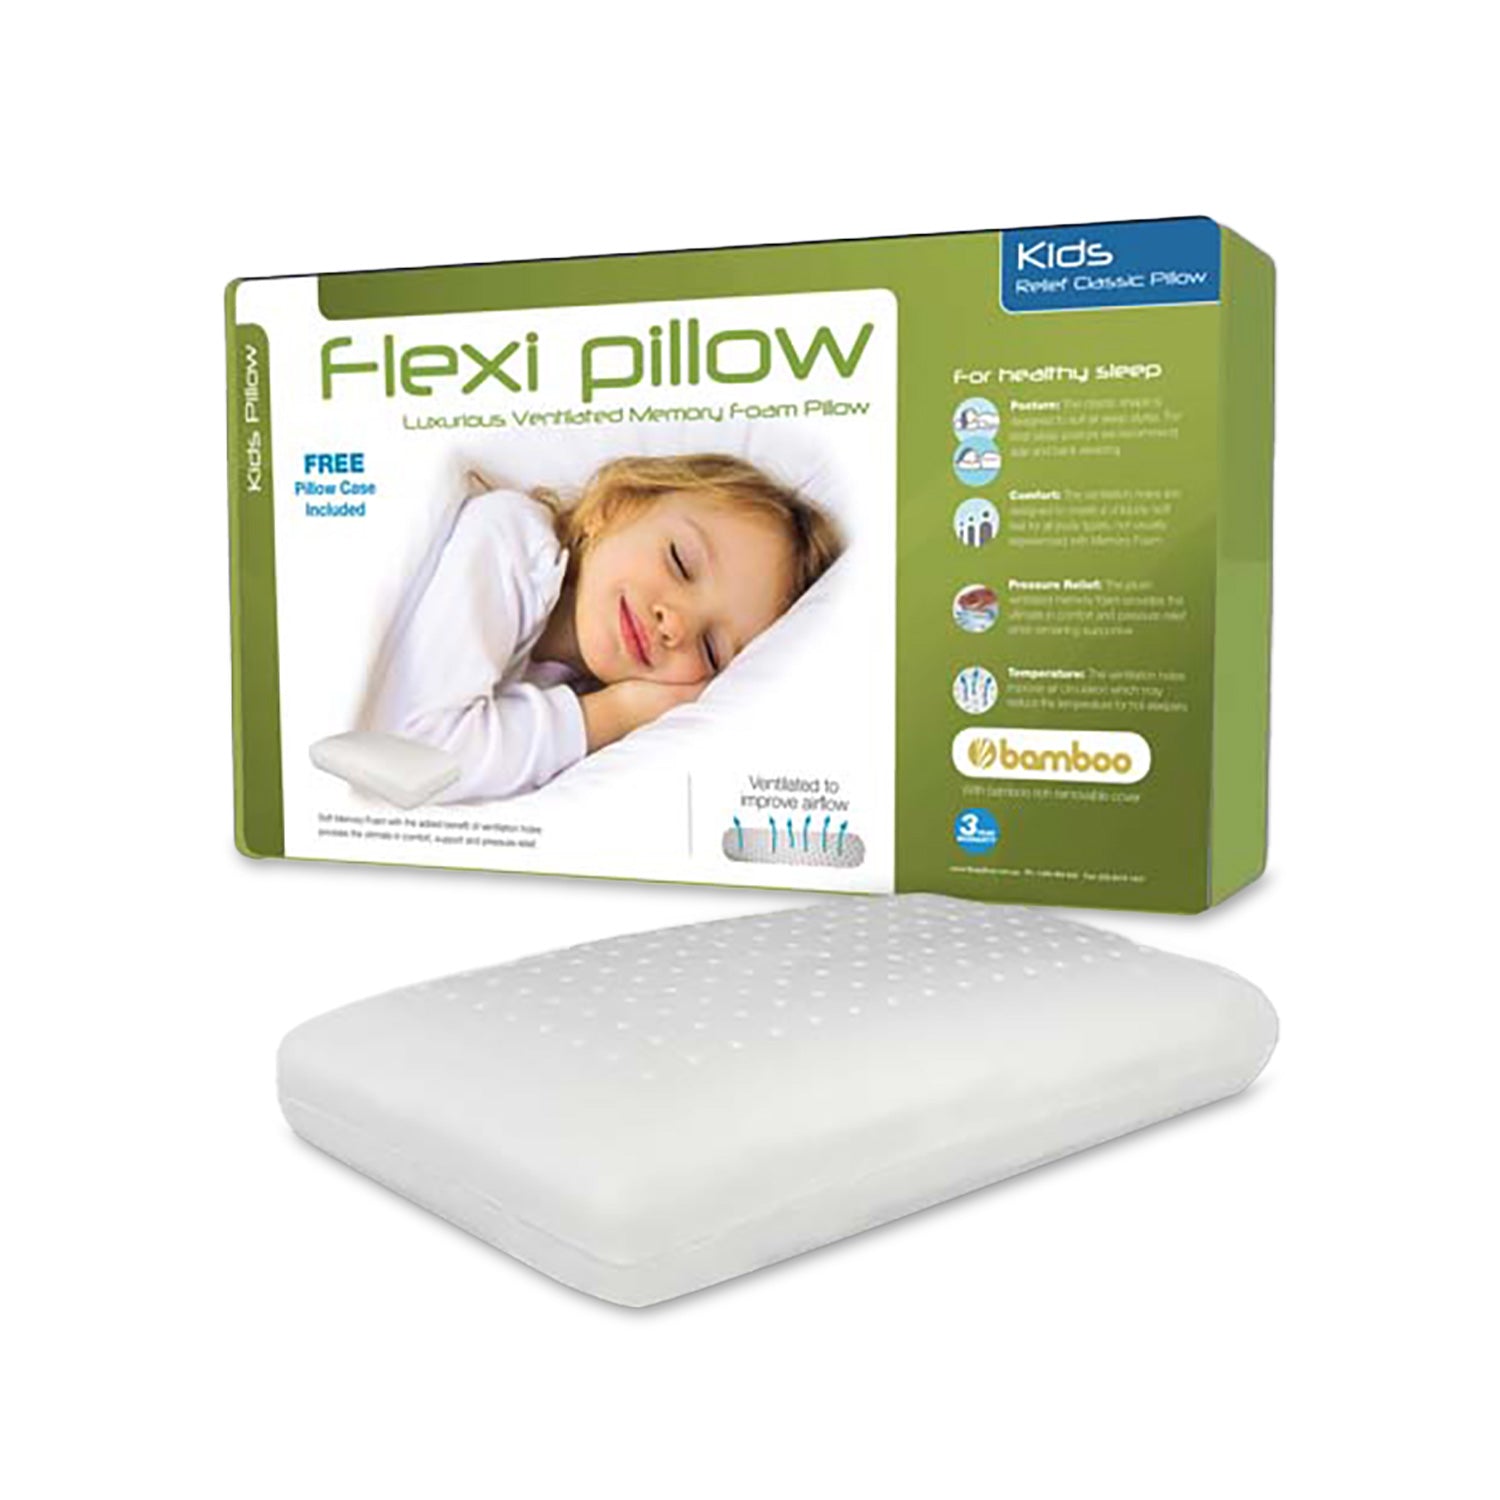 Flexi Pillow - Relief Classic Kids Pillow With Bamboo - Mattress & Pillow SciencePillows